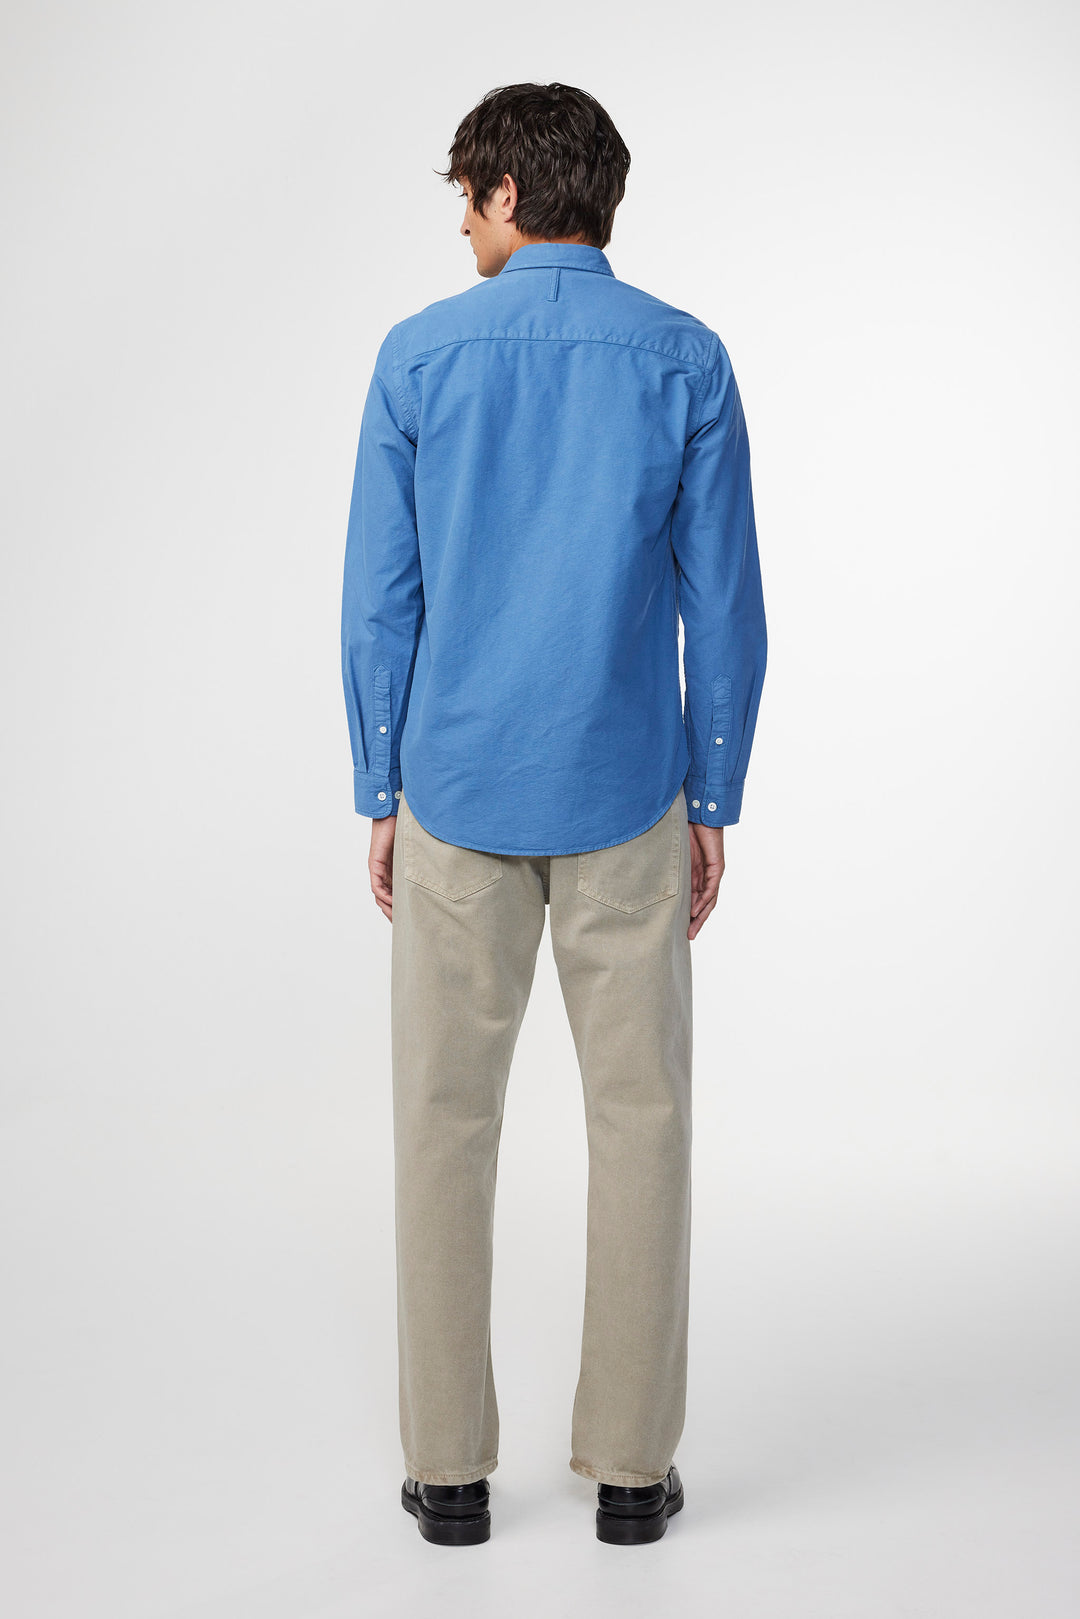 NN07 Arne No PKT 5725 Shirt in Gray Blue | Buster McGee